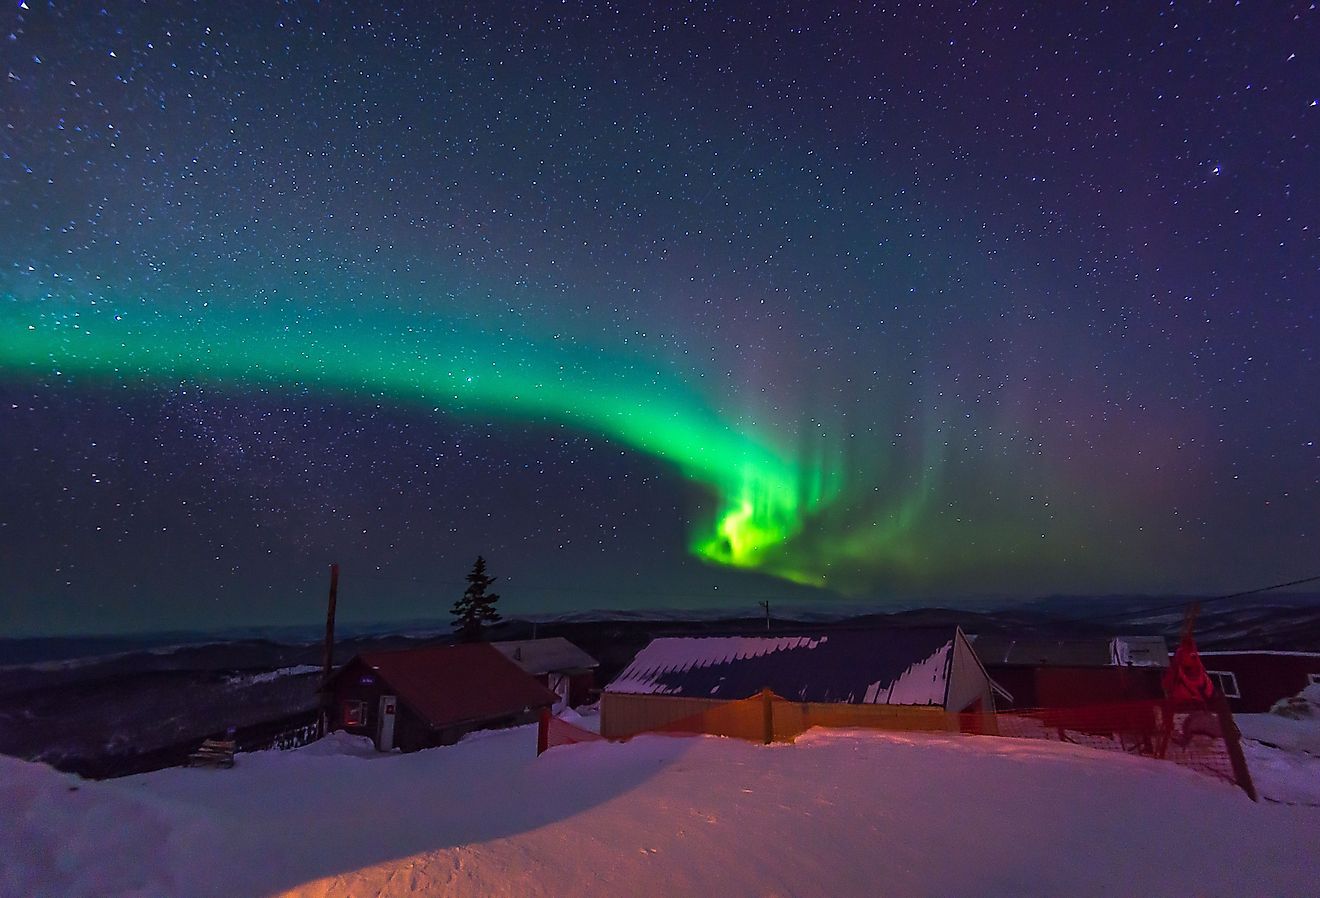 Northern lights, aurora borealis, dancing over the lovely community of Fairbanks, Alaska.